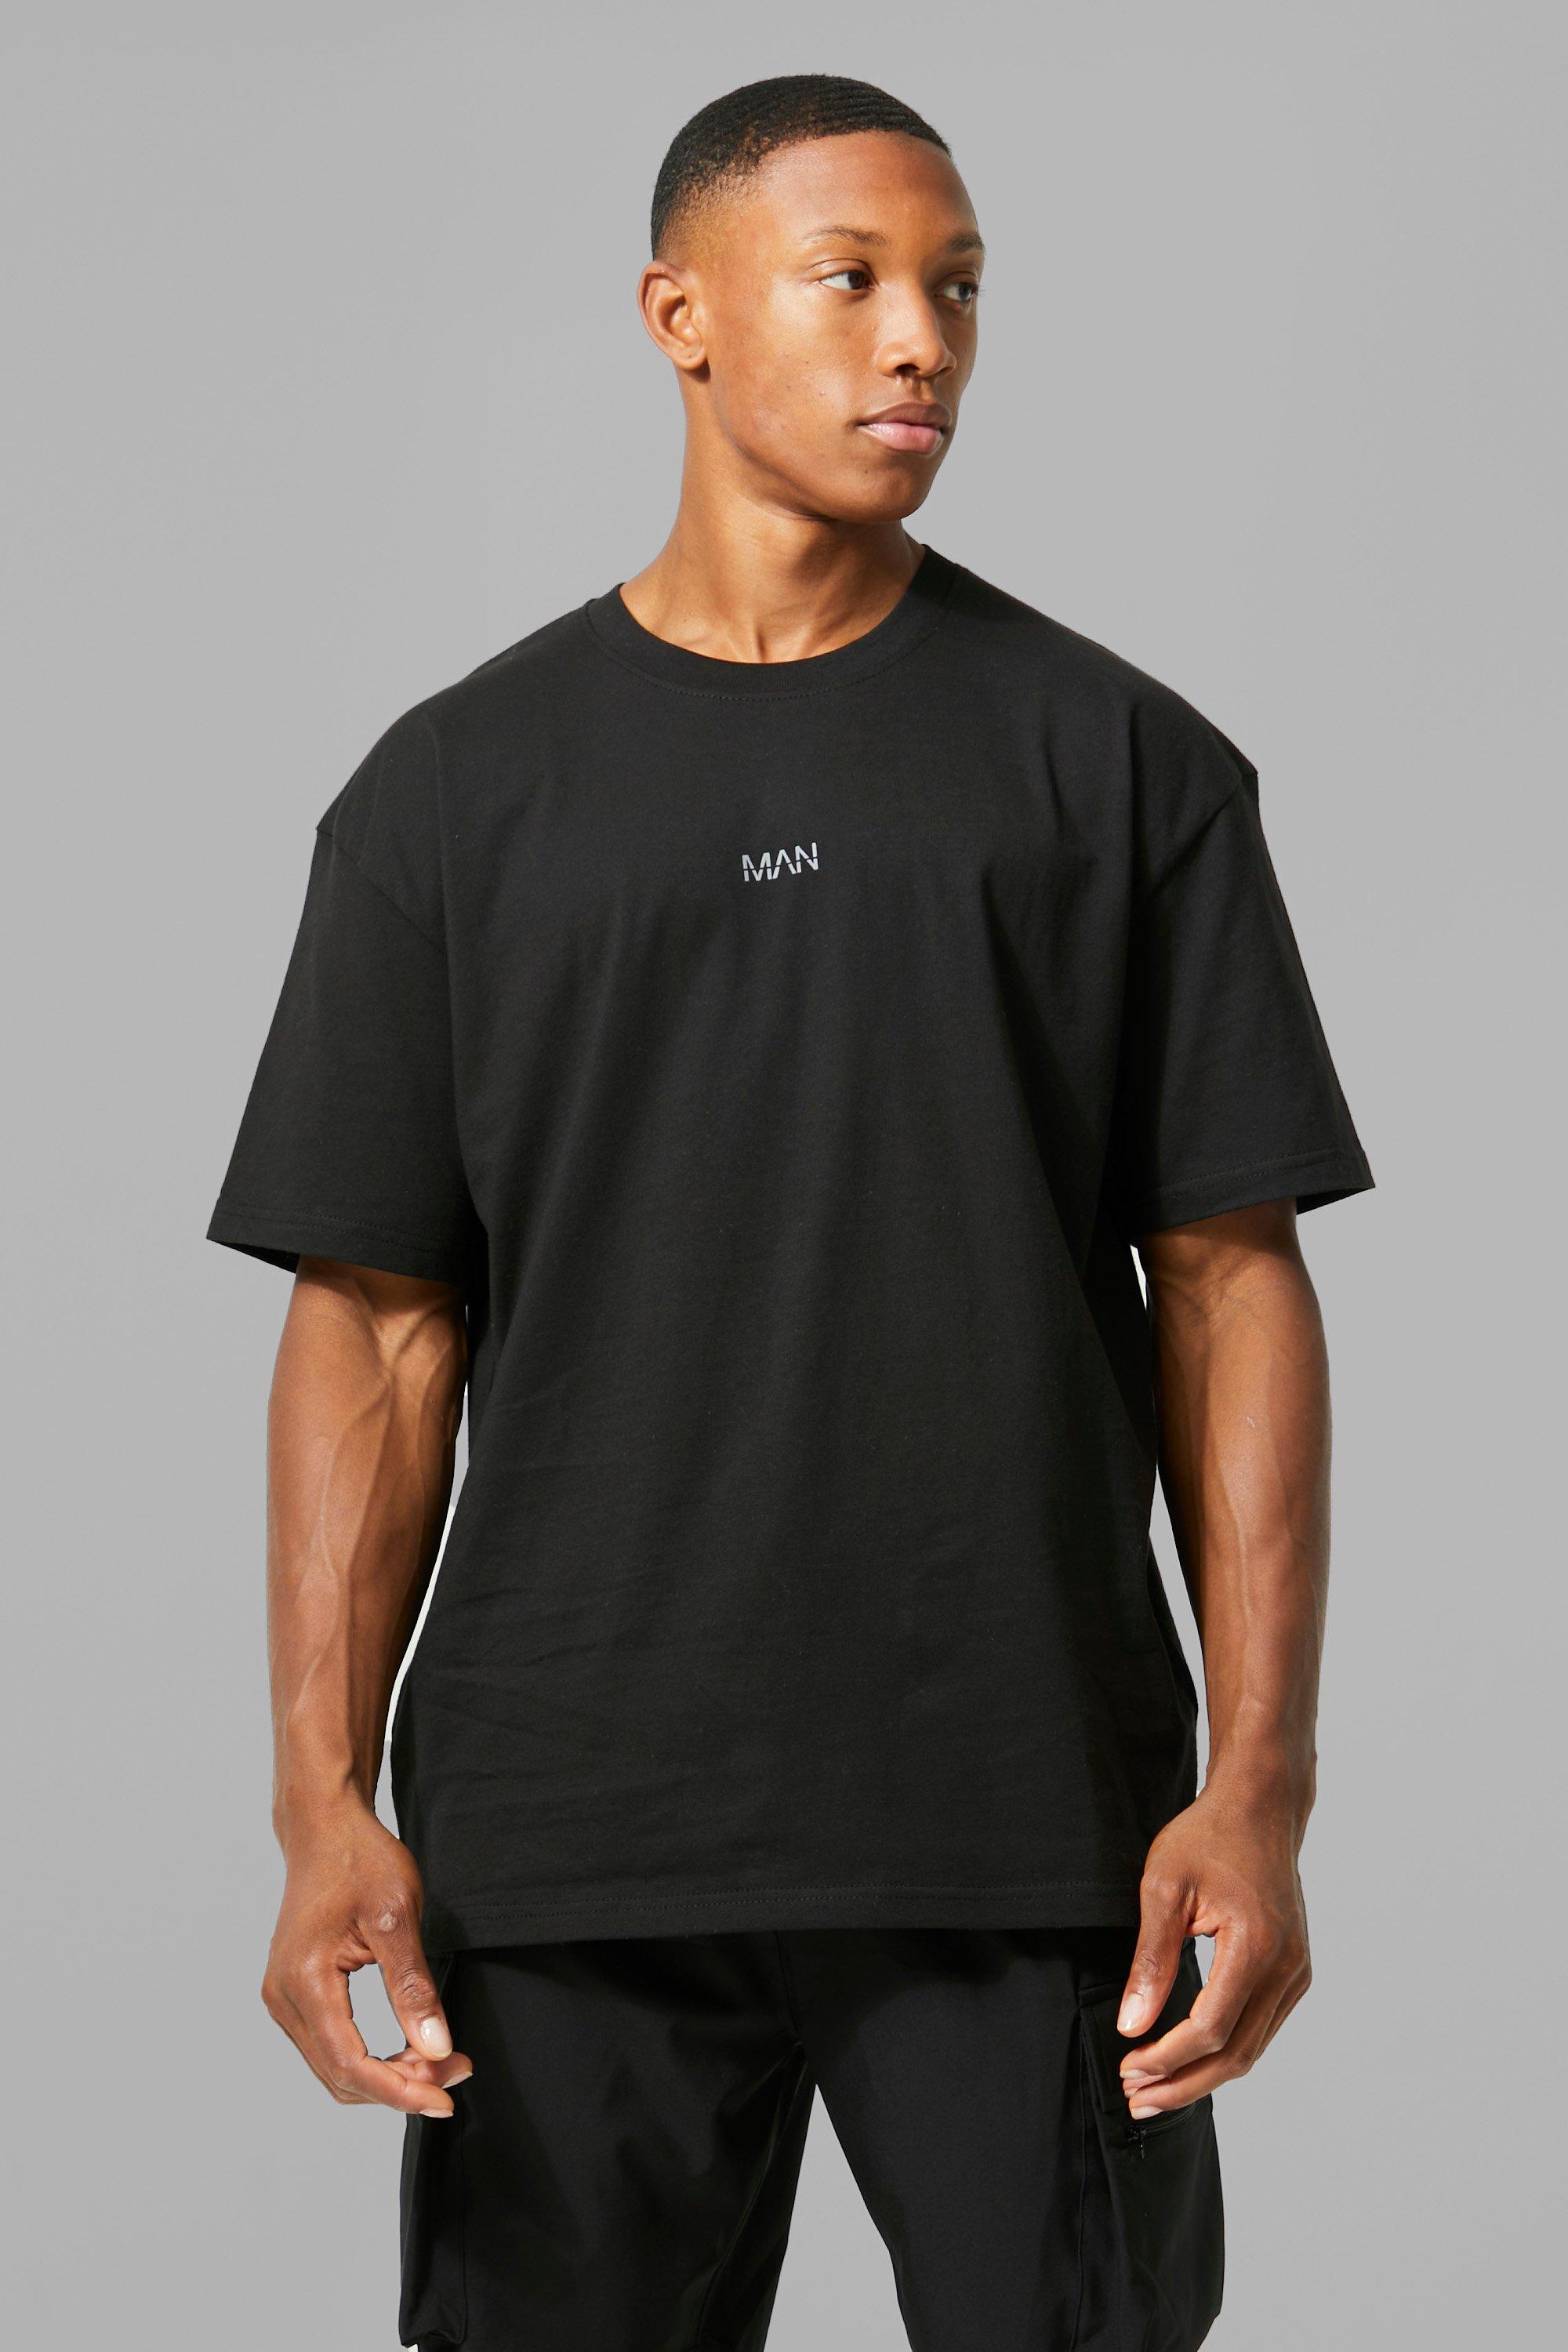 man active oversize gym basic t-shirt - black - xs, black